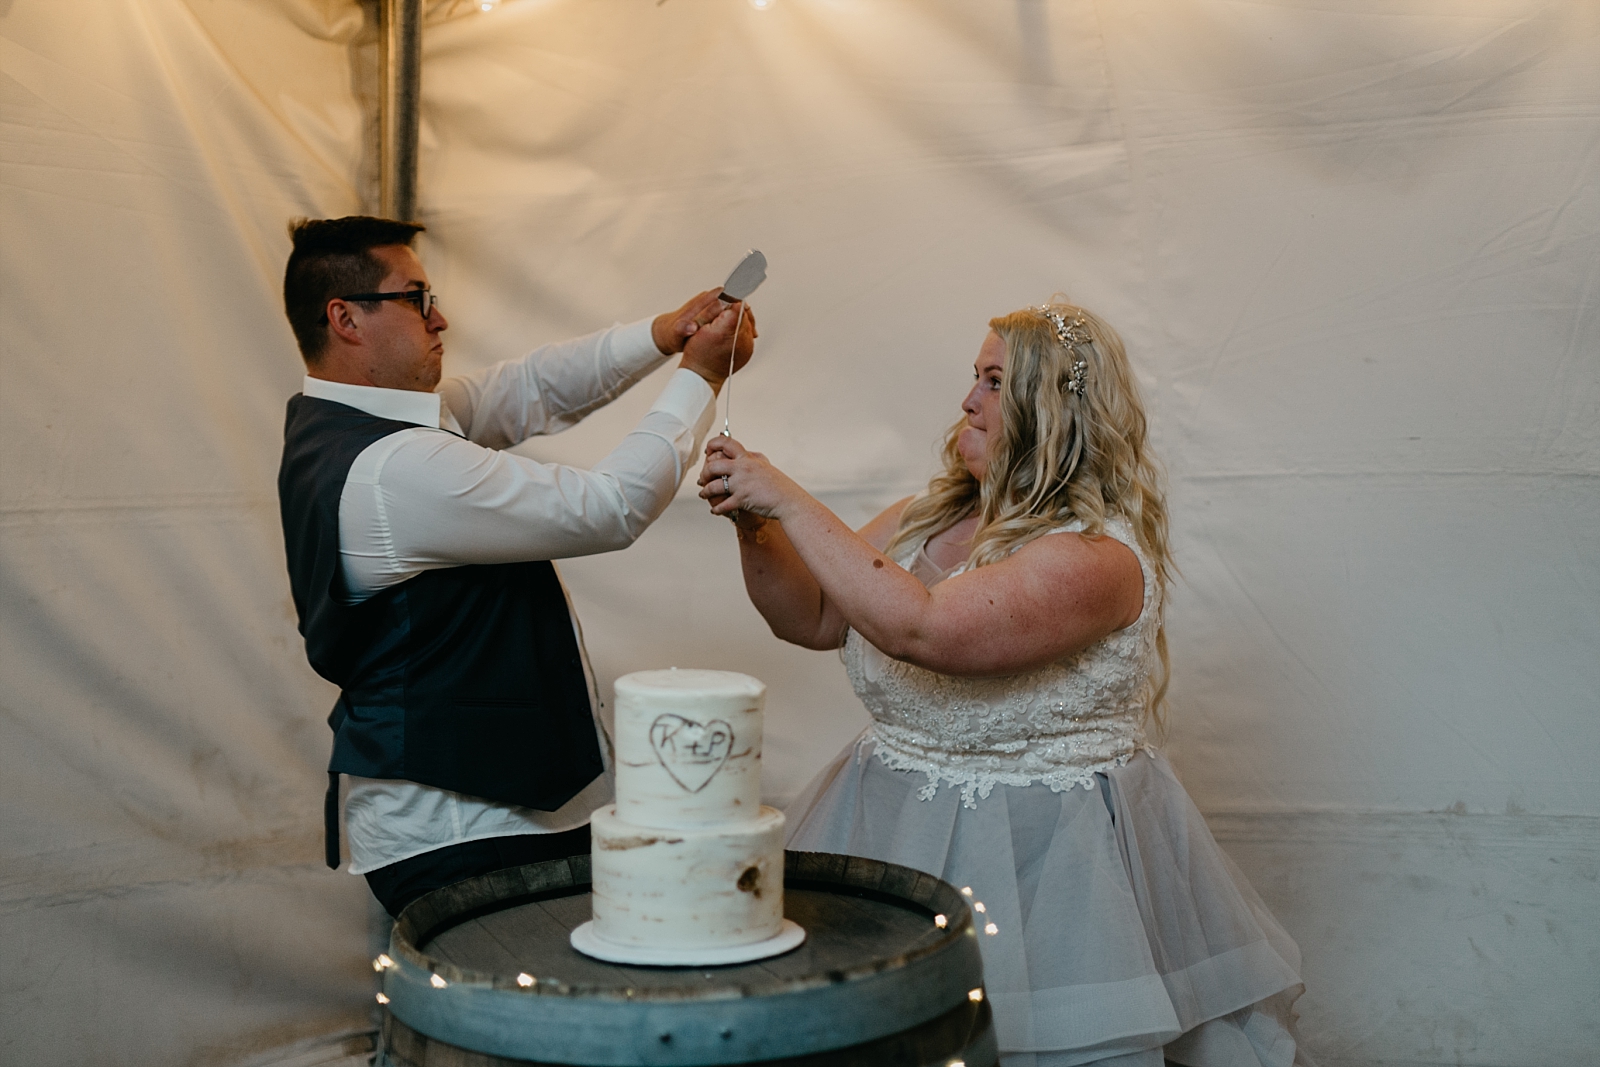 Cake cutting sword fight outdoor backyard tent fun Wedding Photos Prescott, Arizona Samantha Patri Photography